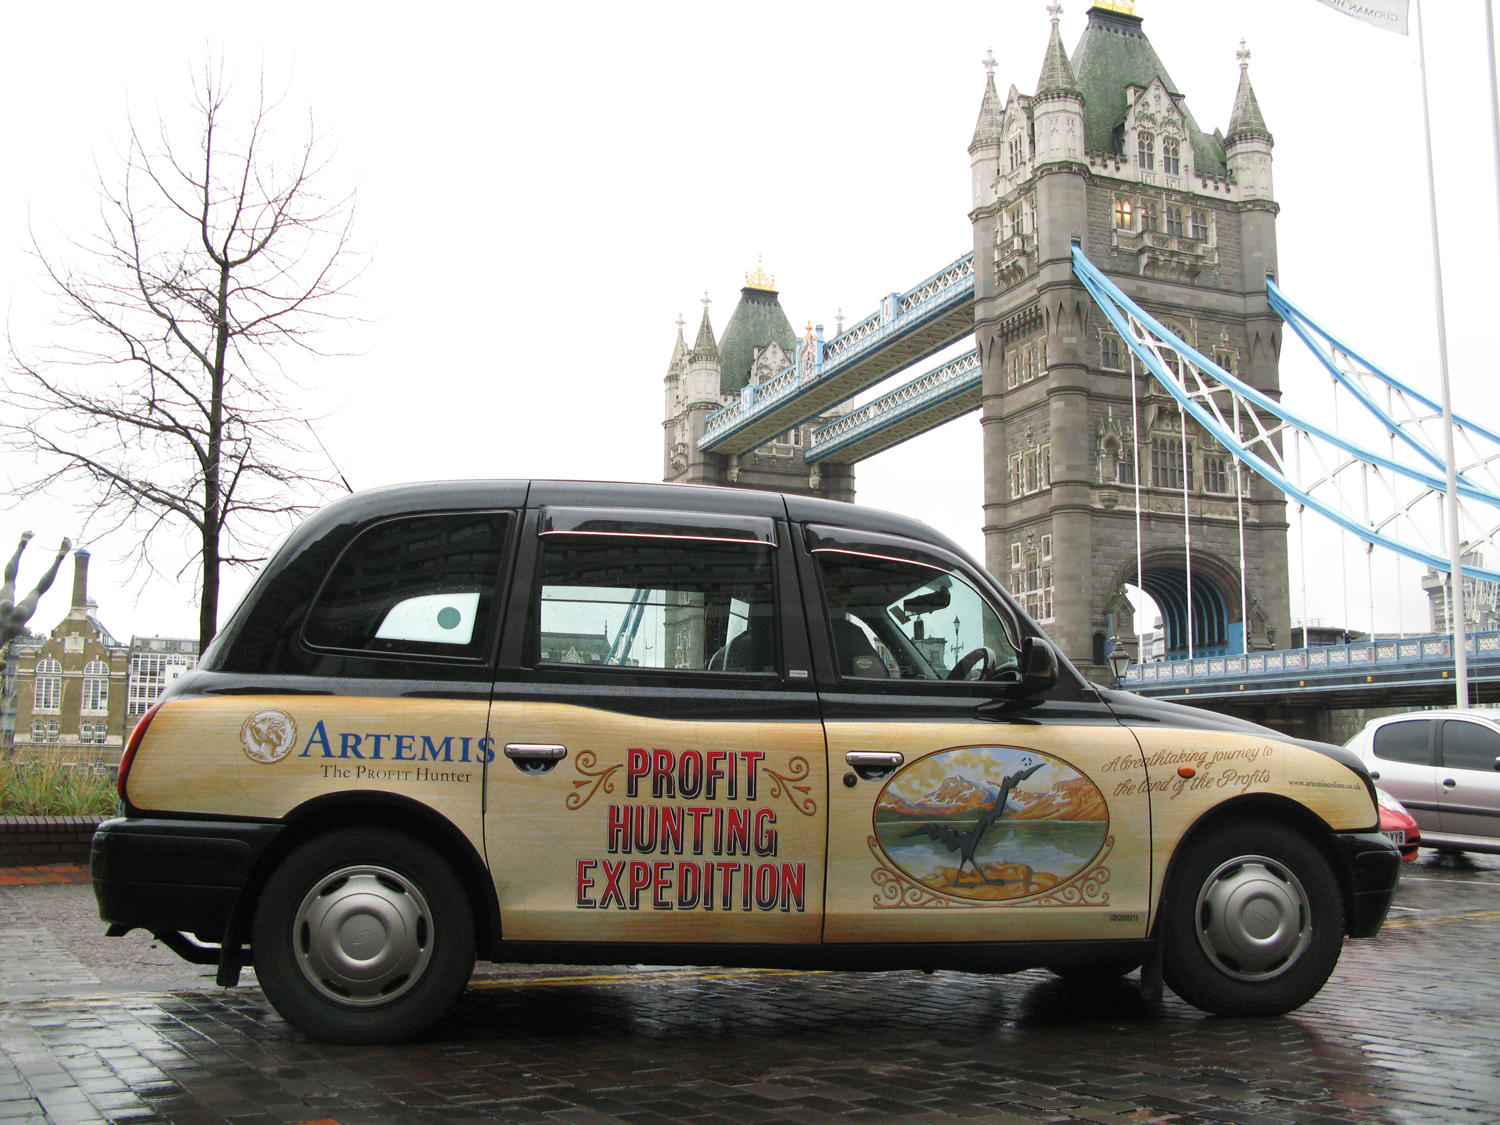 2007 Ubiquitous taxi advertising campaign for Artemis - Various